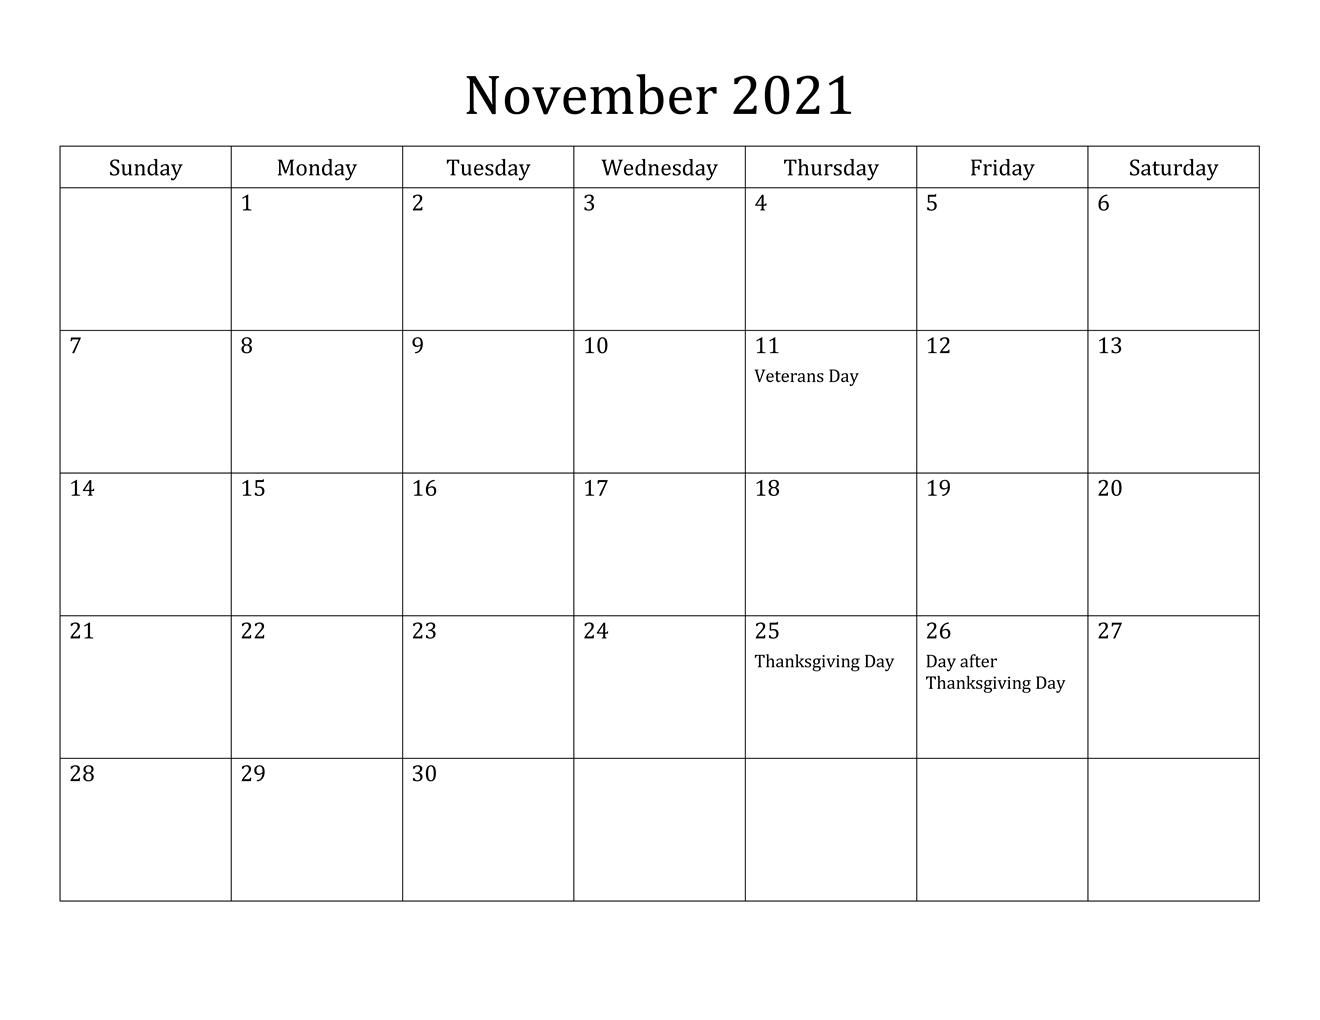 November 2021 Calendar Telugu Kalnirnay With Festivals November 2021 Calendar Telugu